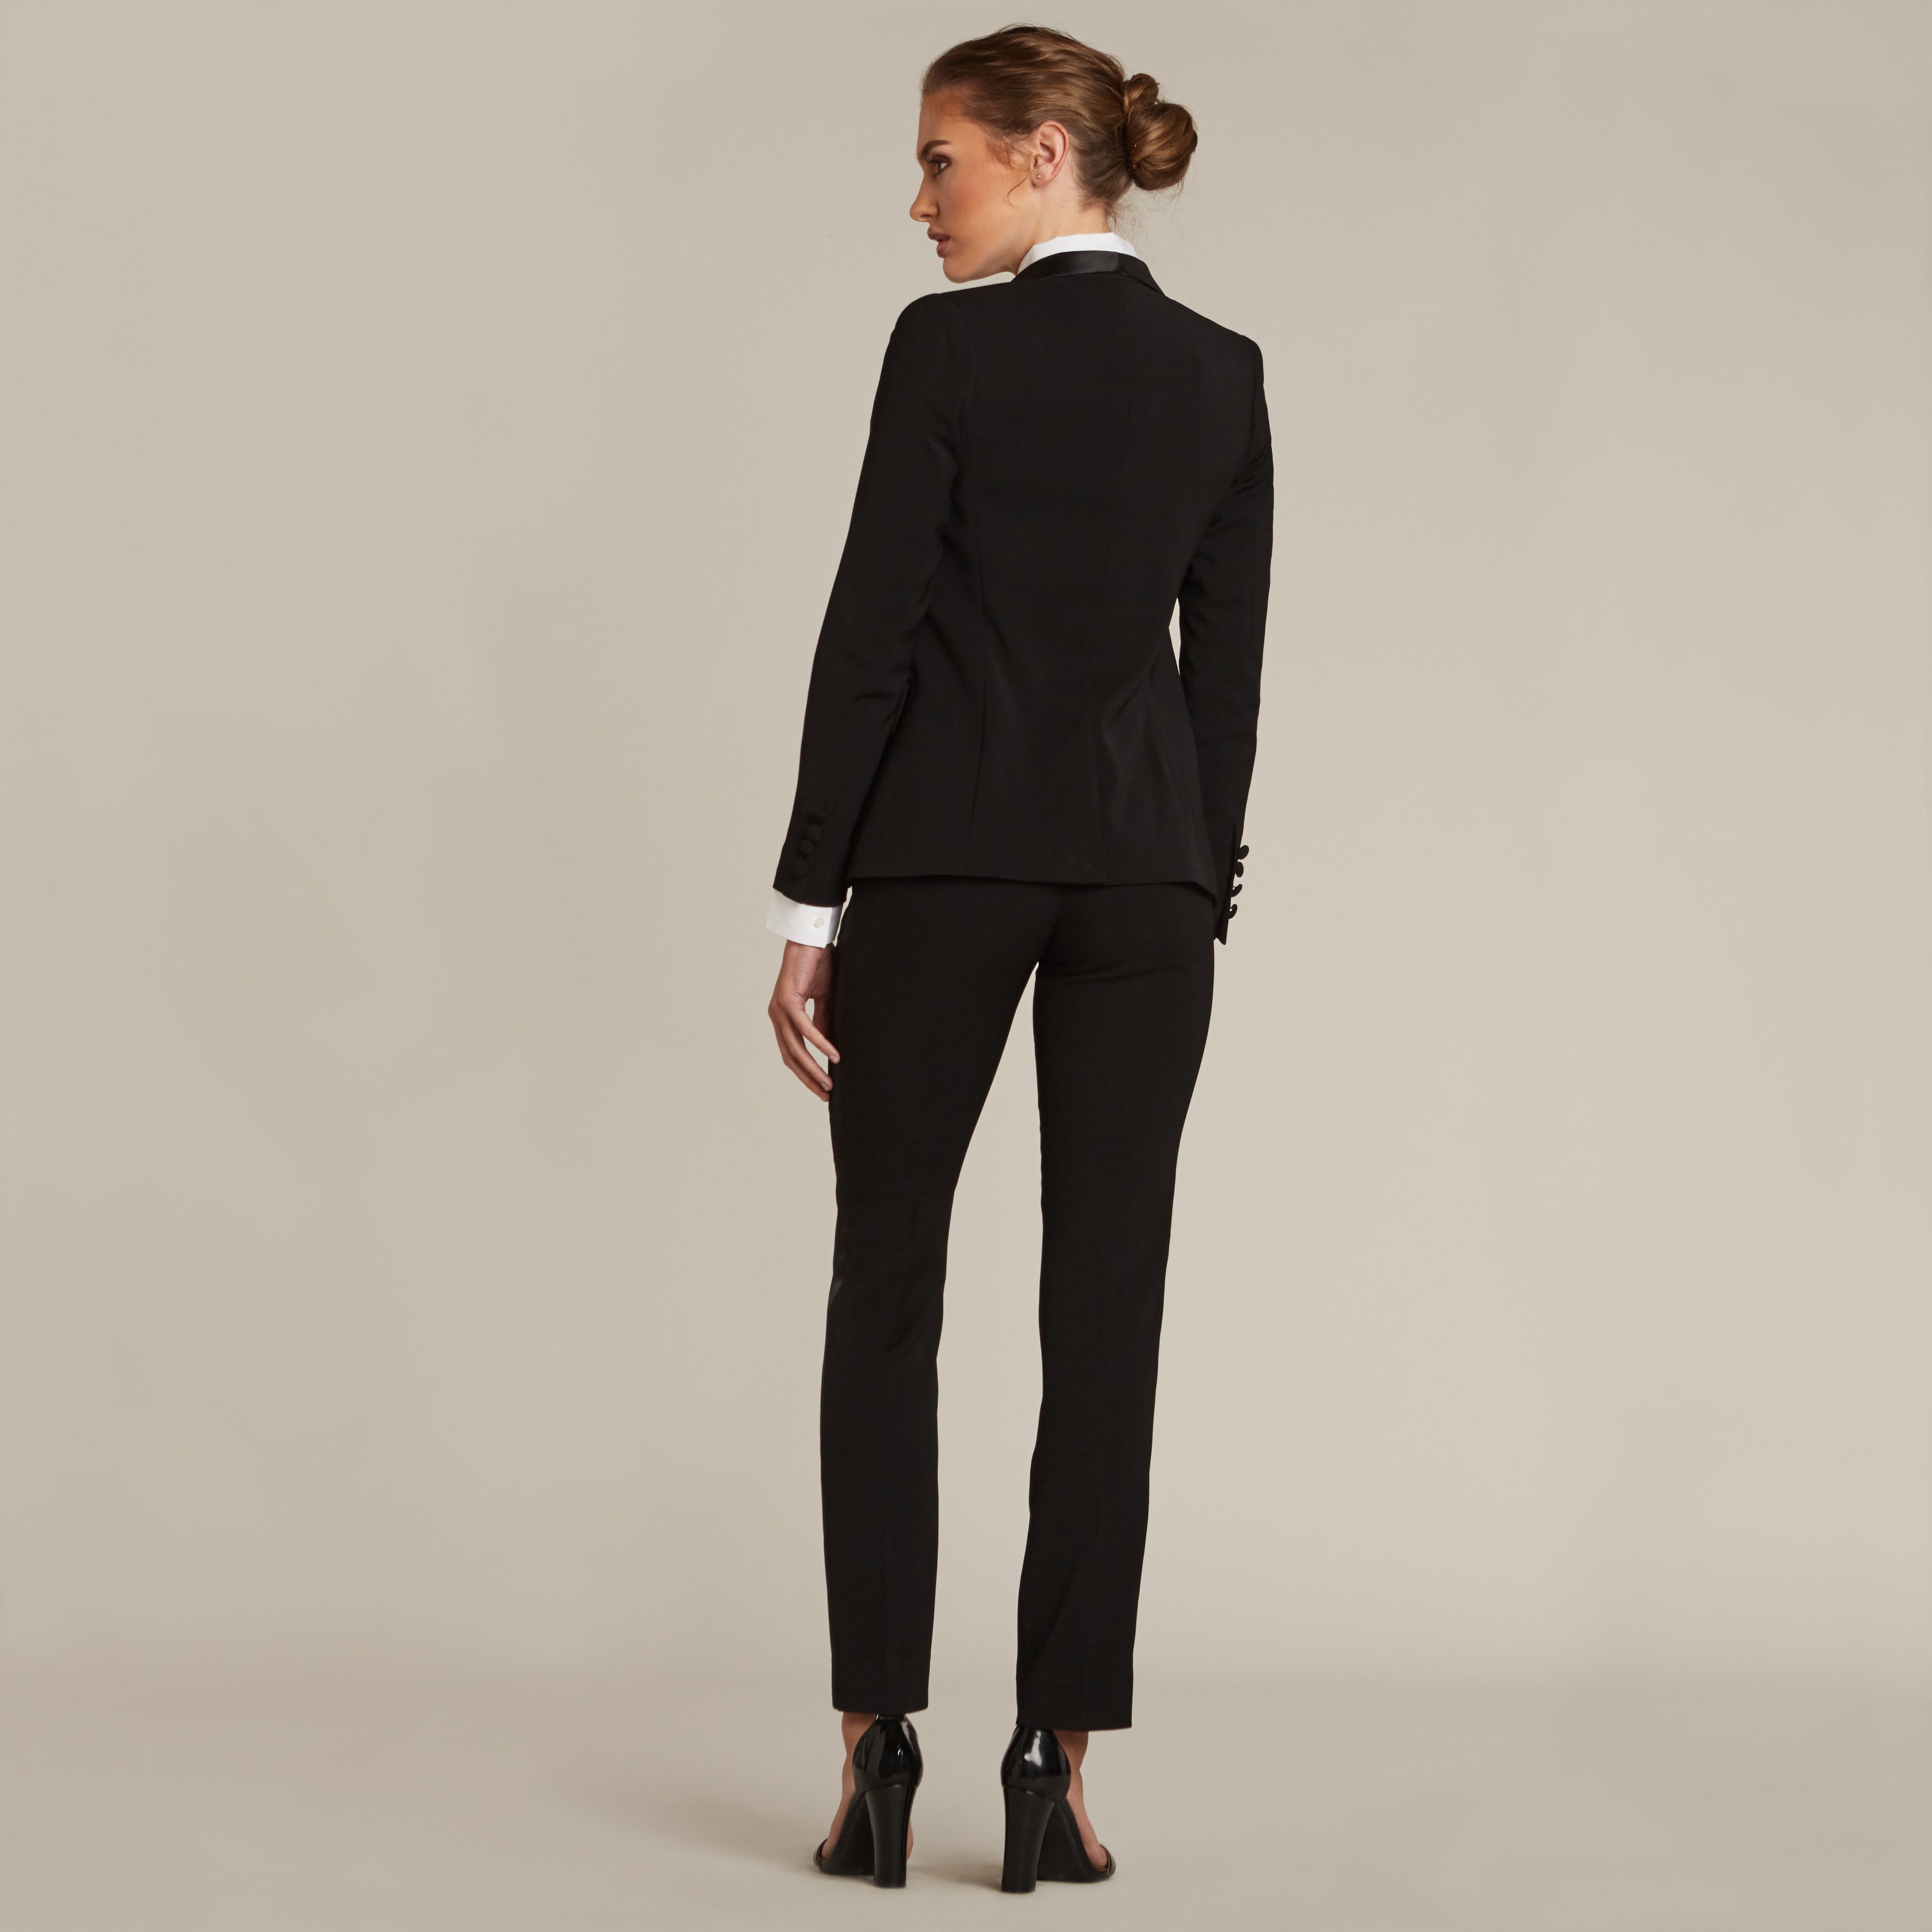 Black Slim Fit Tuxedo Pants - Women’s Tuxedo Suits | girls prom tuxedo | gal tux | Wedding Party, Bridesmaids